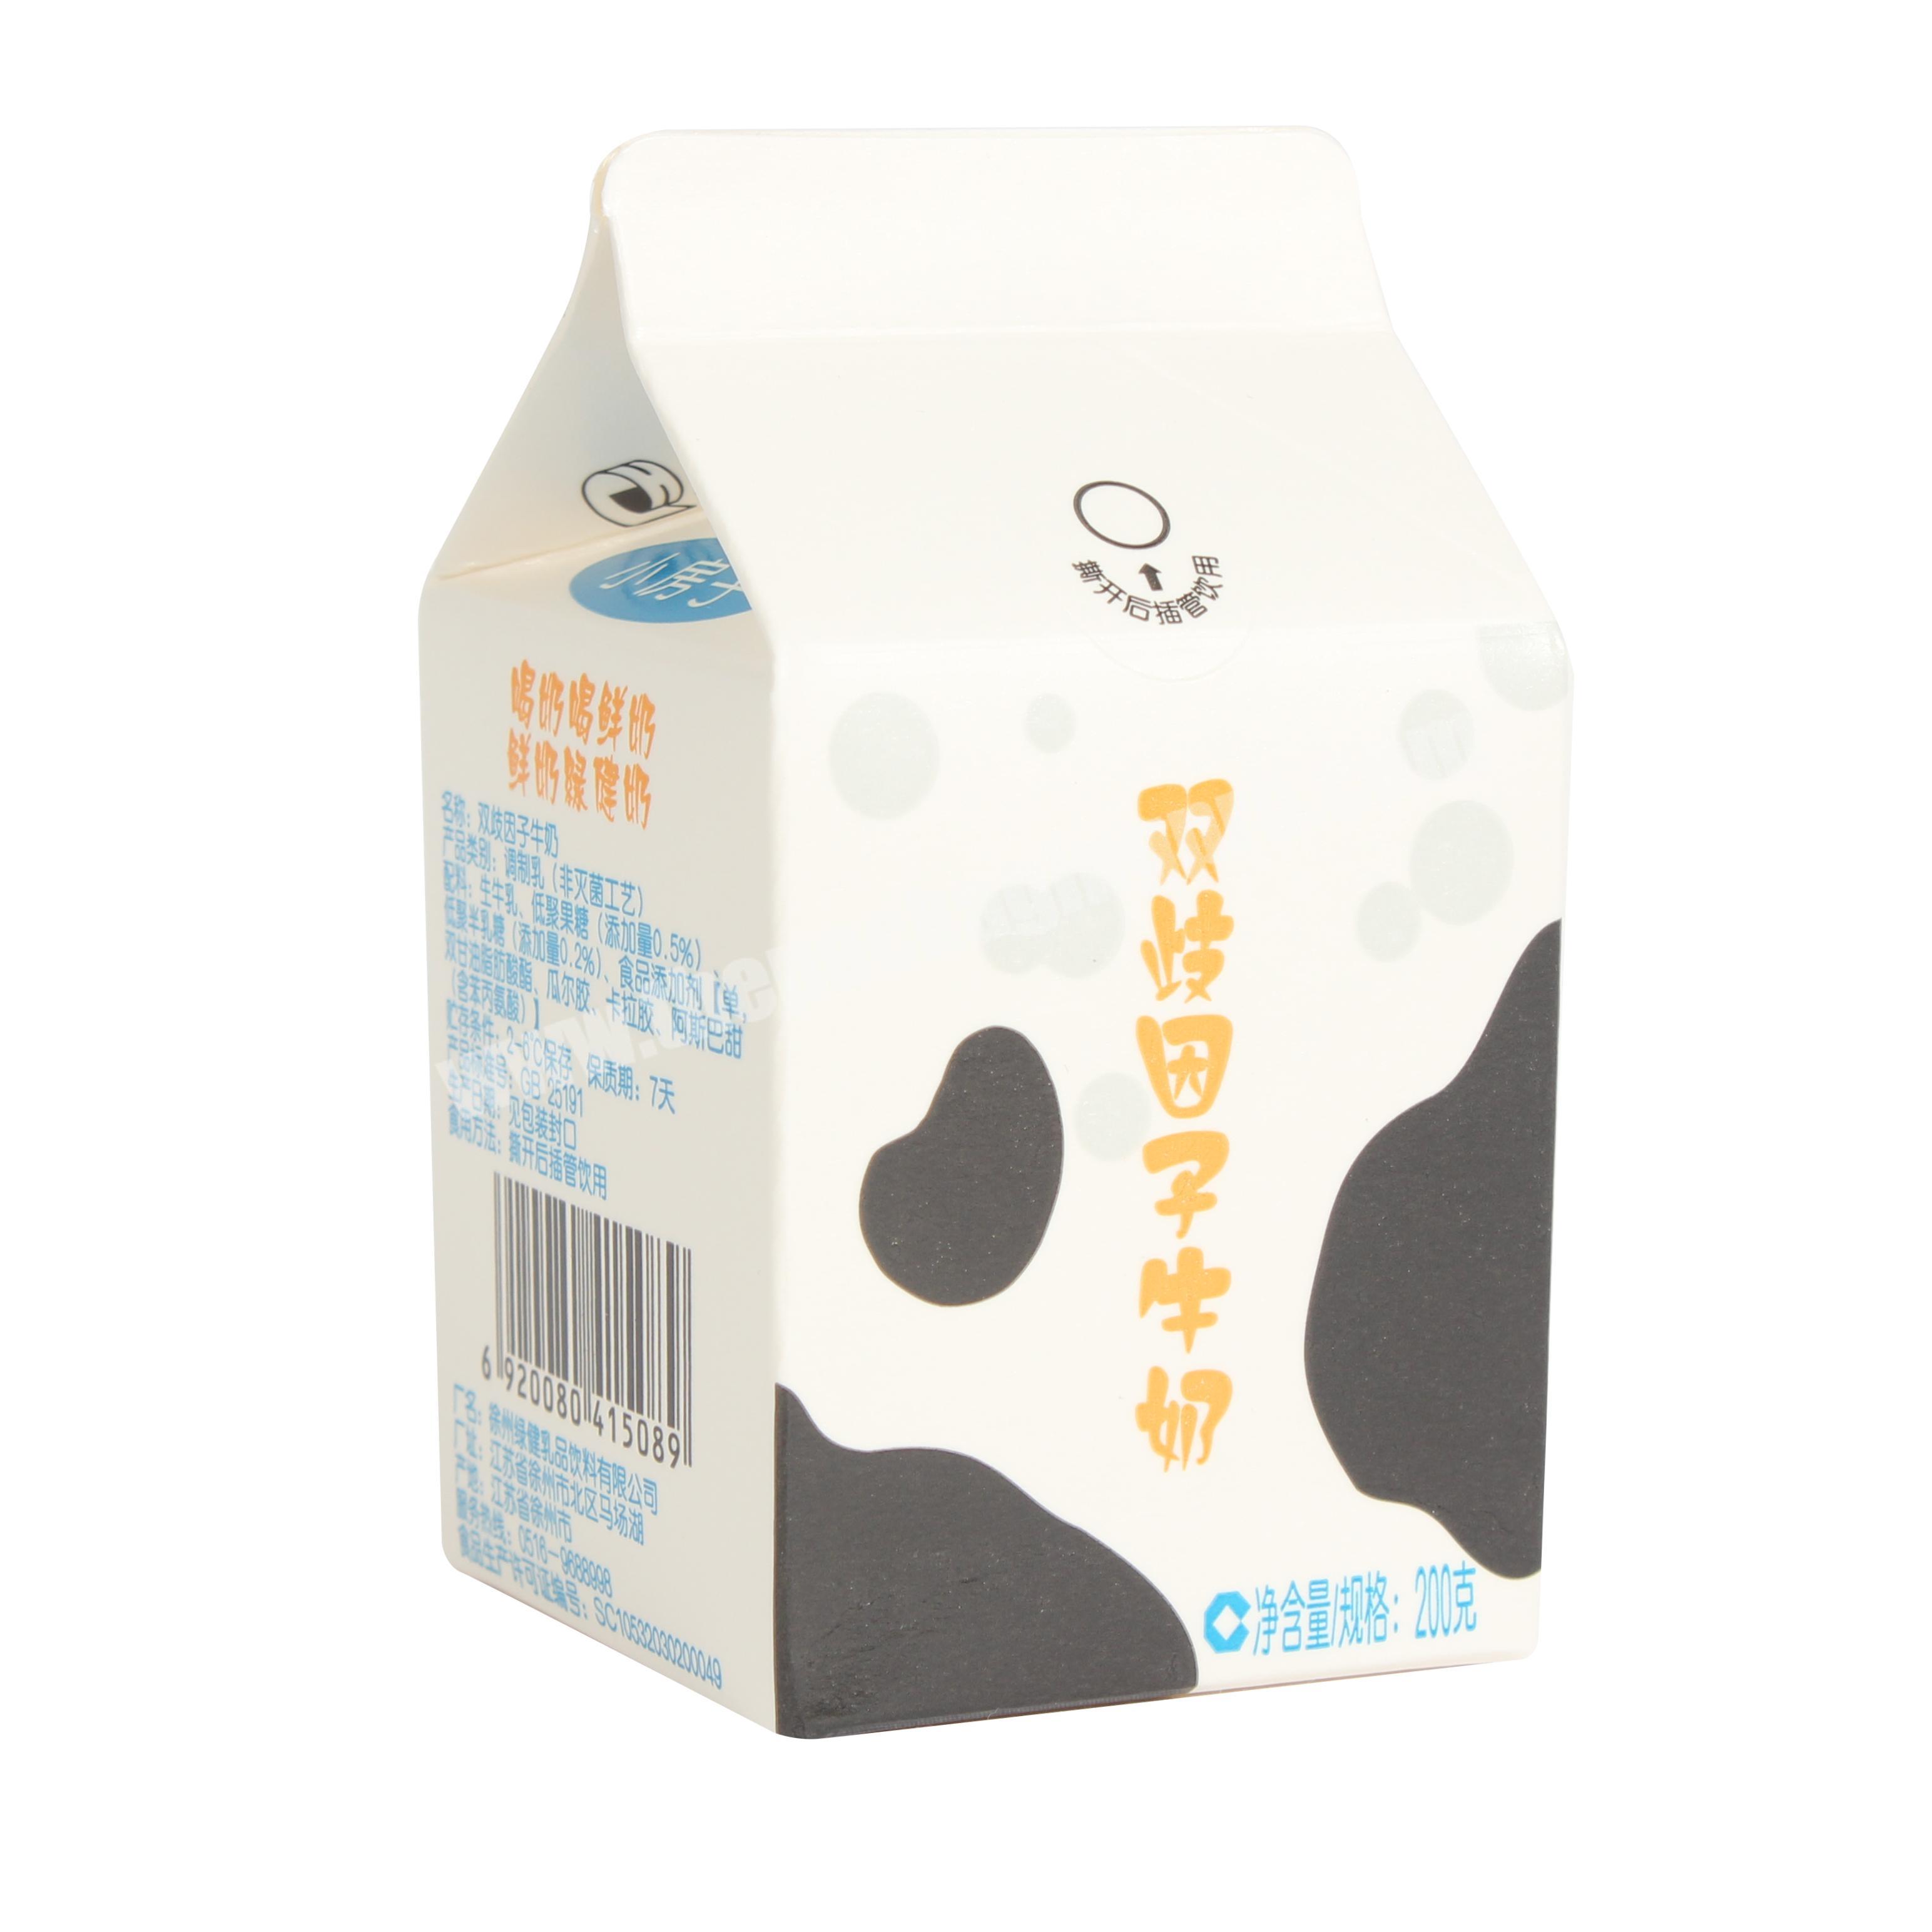 Yongjin 1000ml1L gable top paper carton, juice pack paper carton, gable top paper box for juice with cap